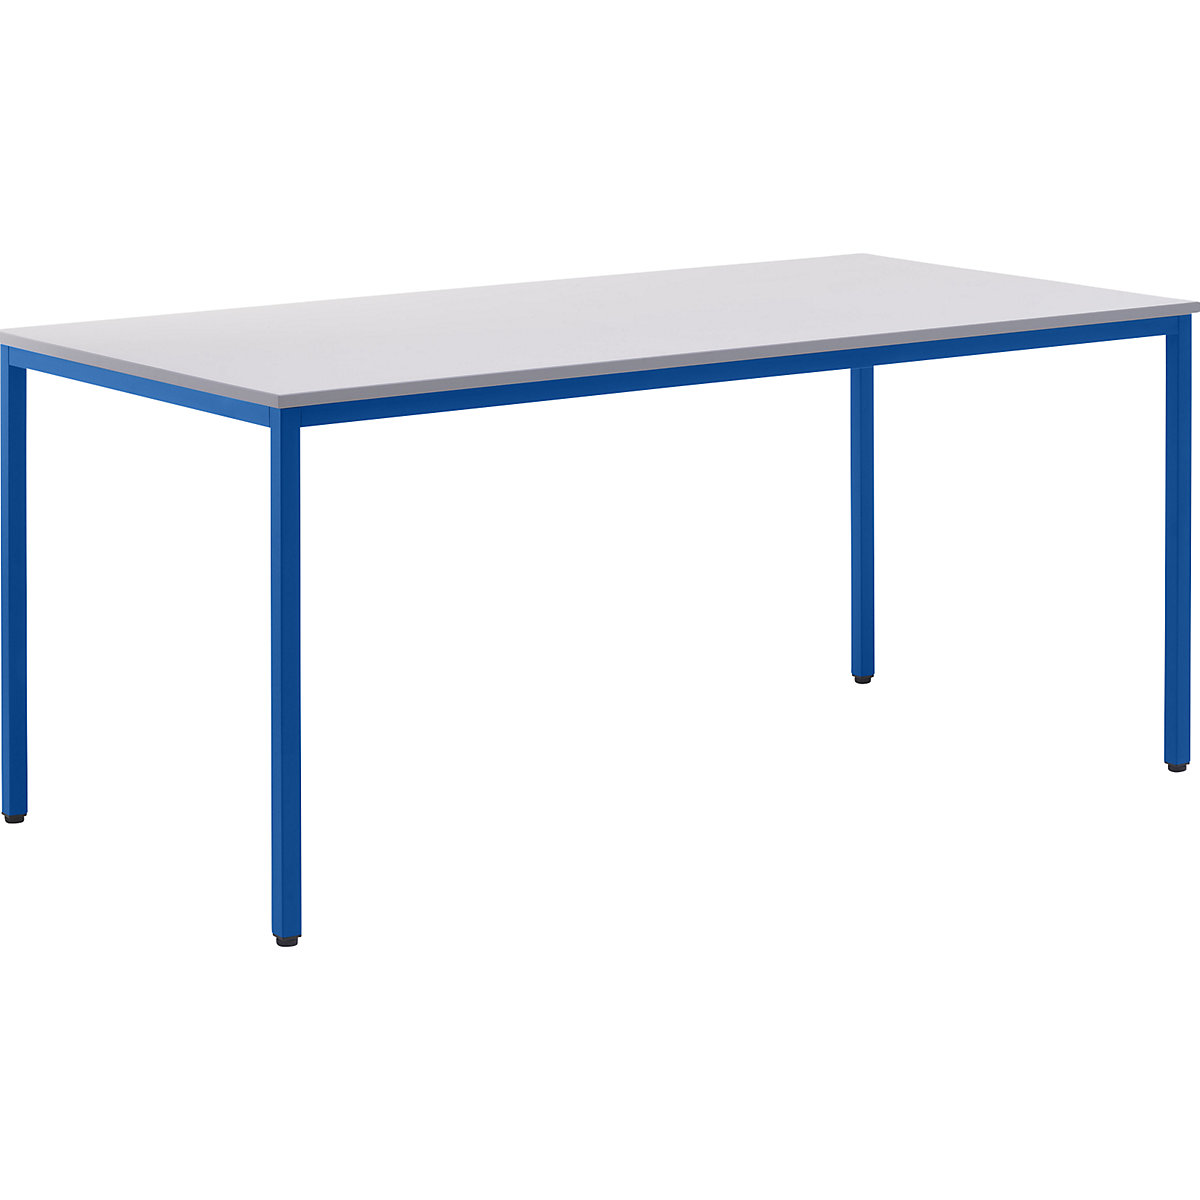 Multifunctionele tafel – eurokraft basic, h x b x d = 720 x 1600 x 800 mm, blad lichtgrijs, frame gentiaanblauw